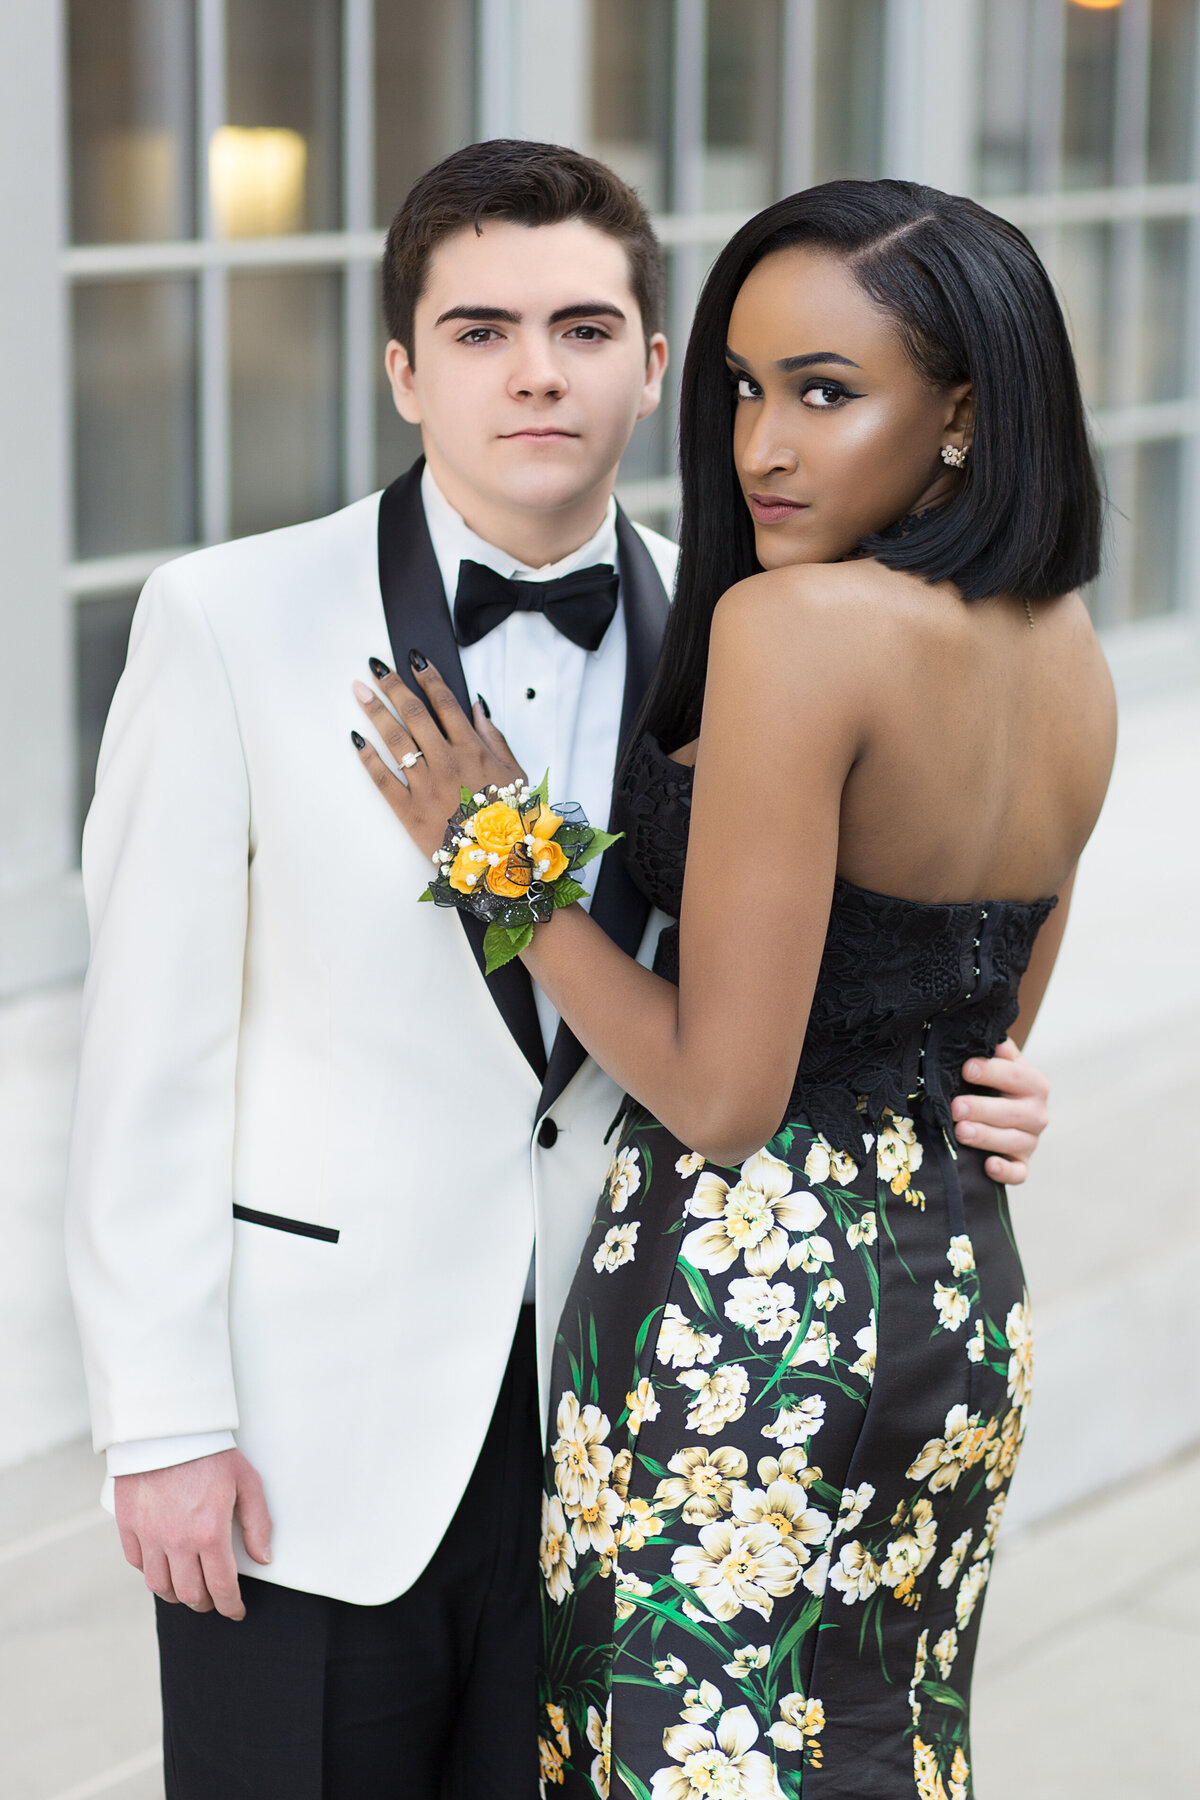 Hoover High School prom couple poses in Birmingham, AL.